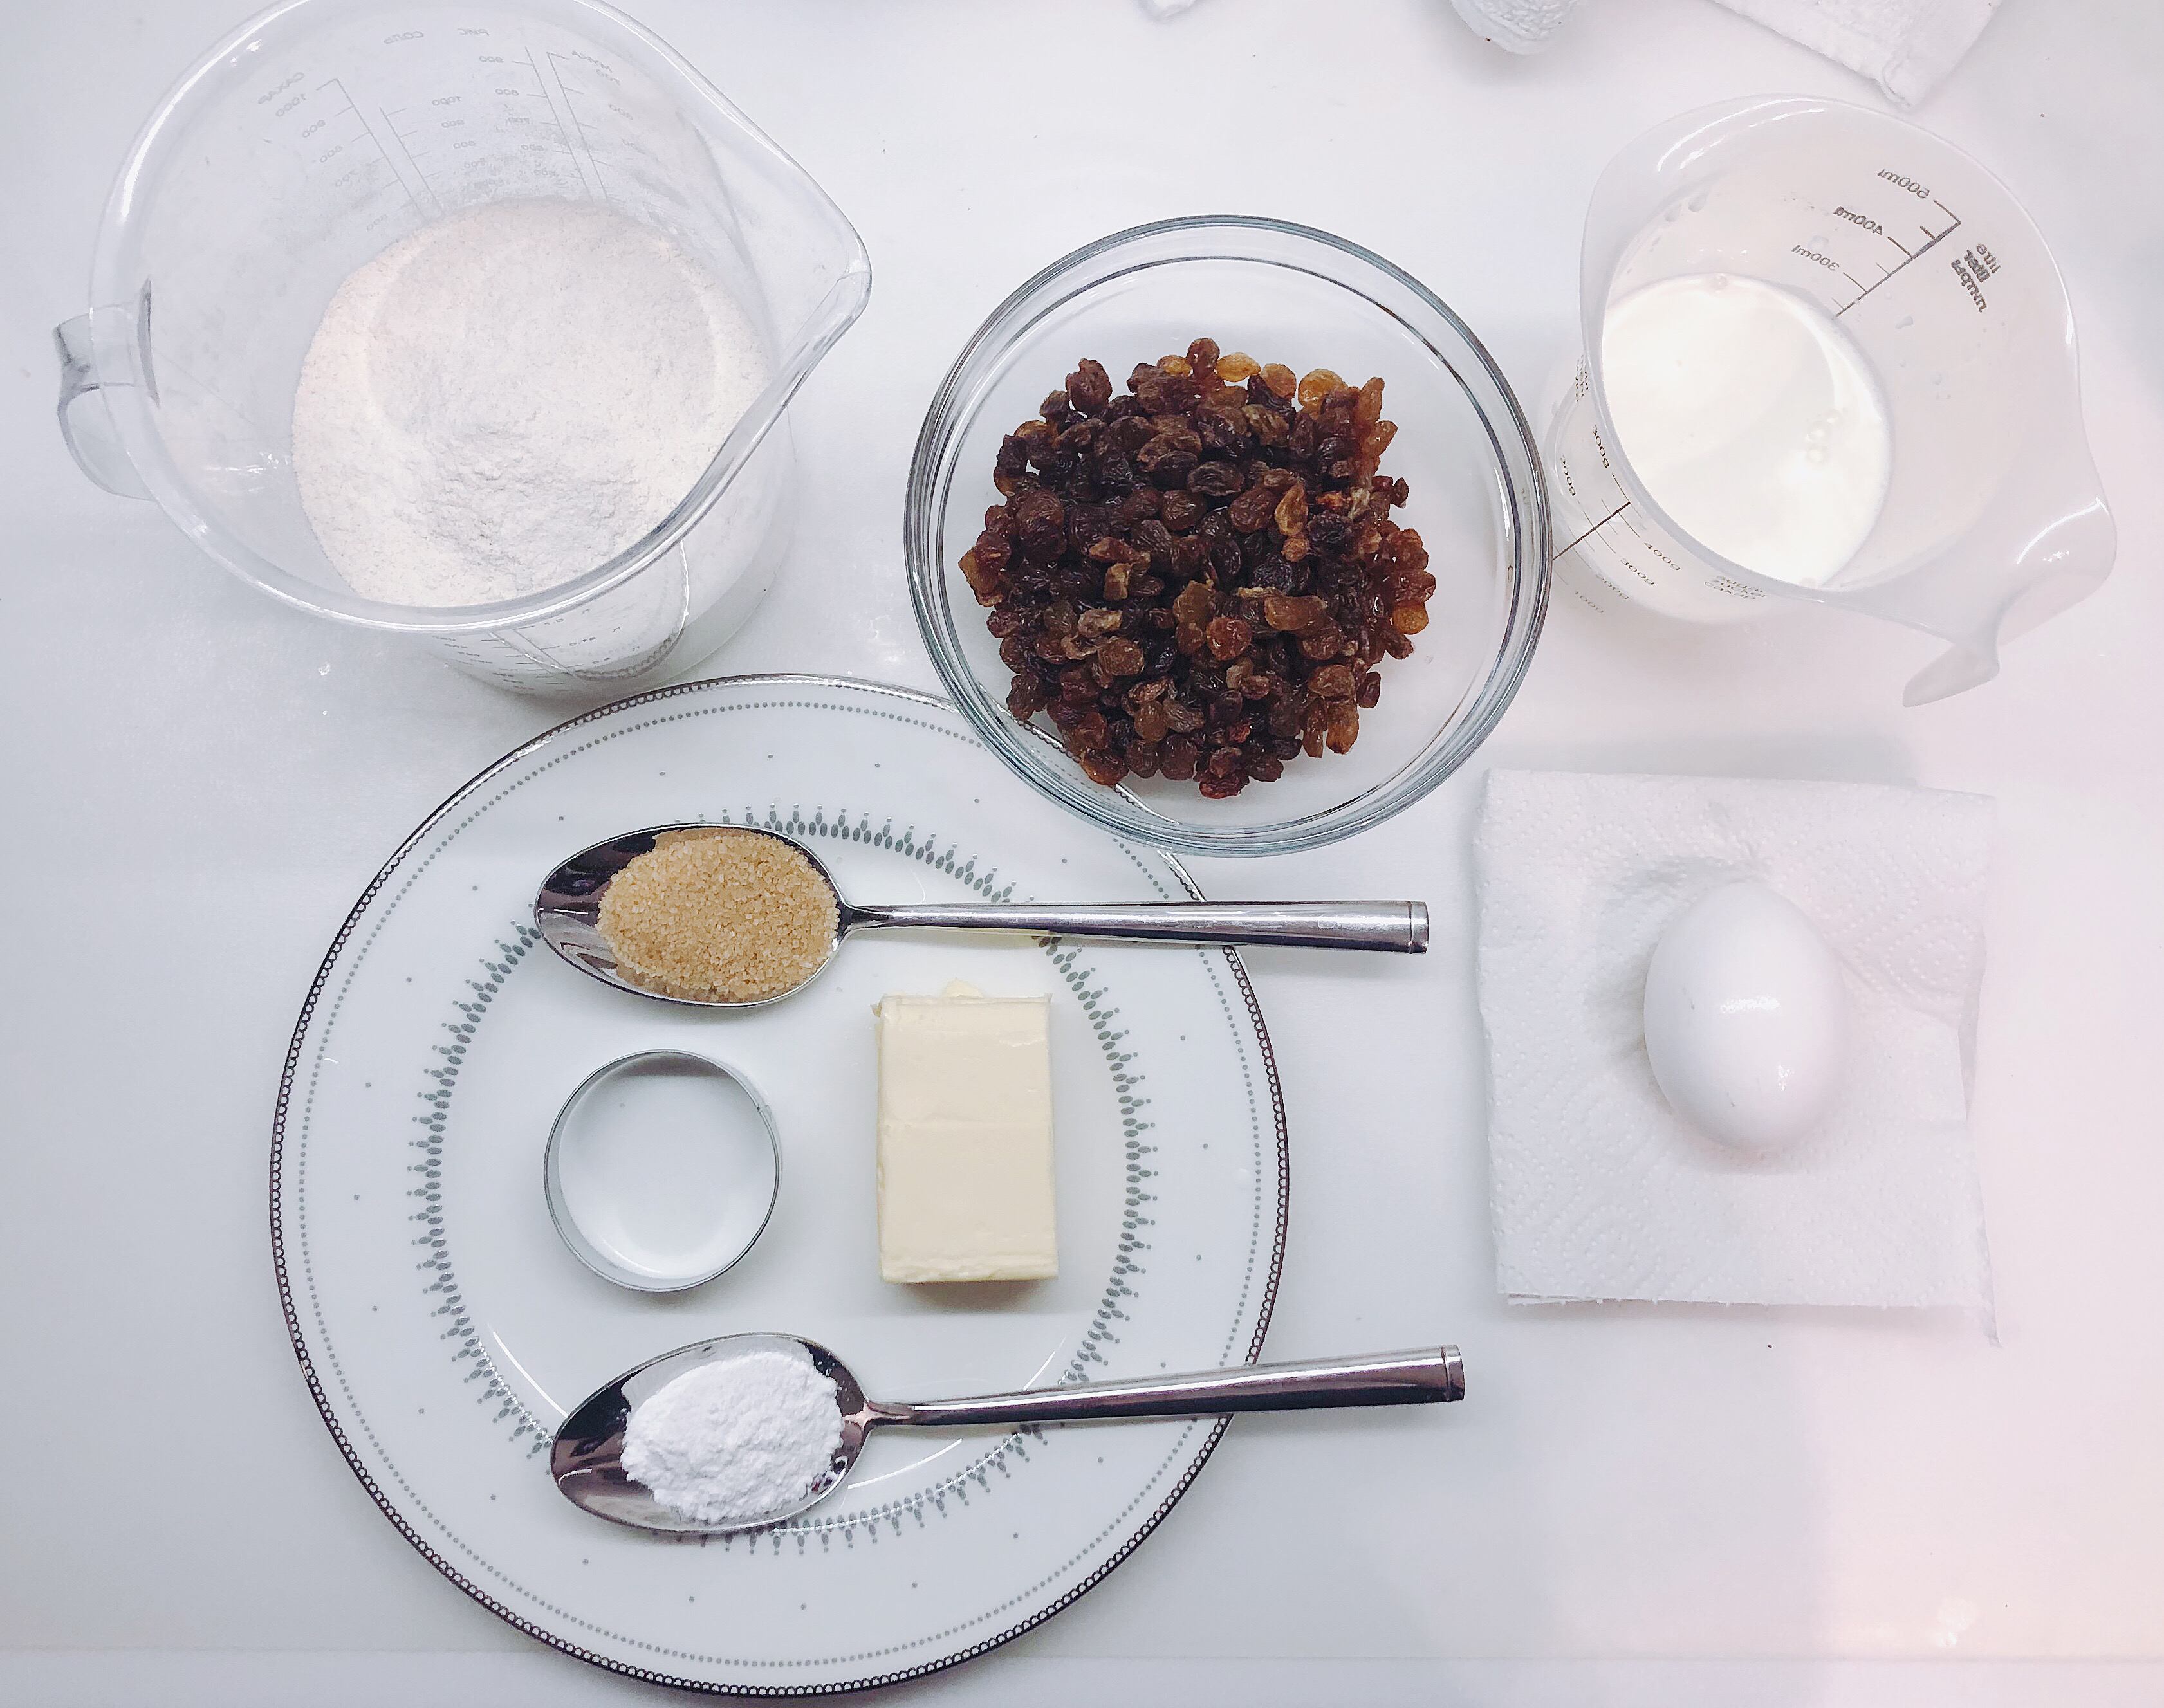 Ingredients to bake scones at home